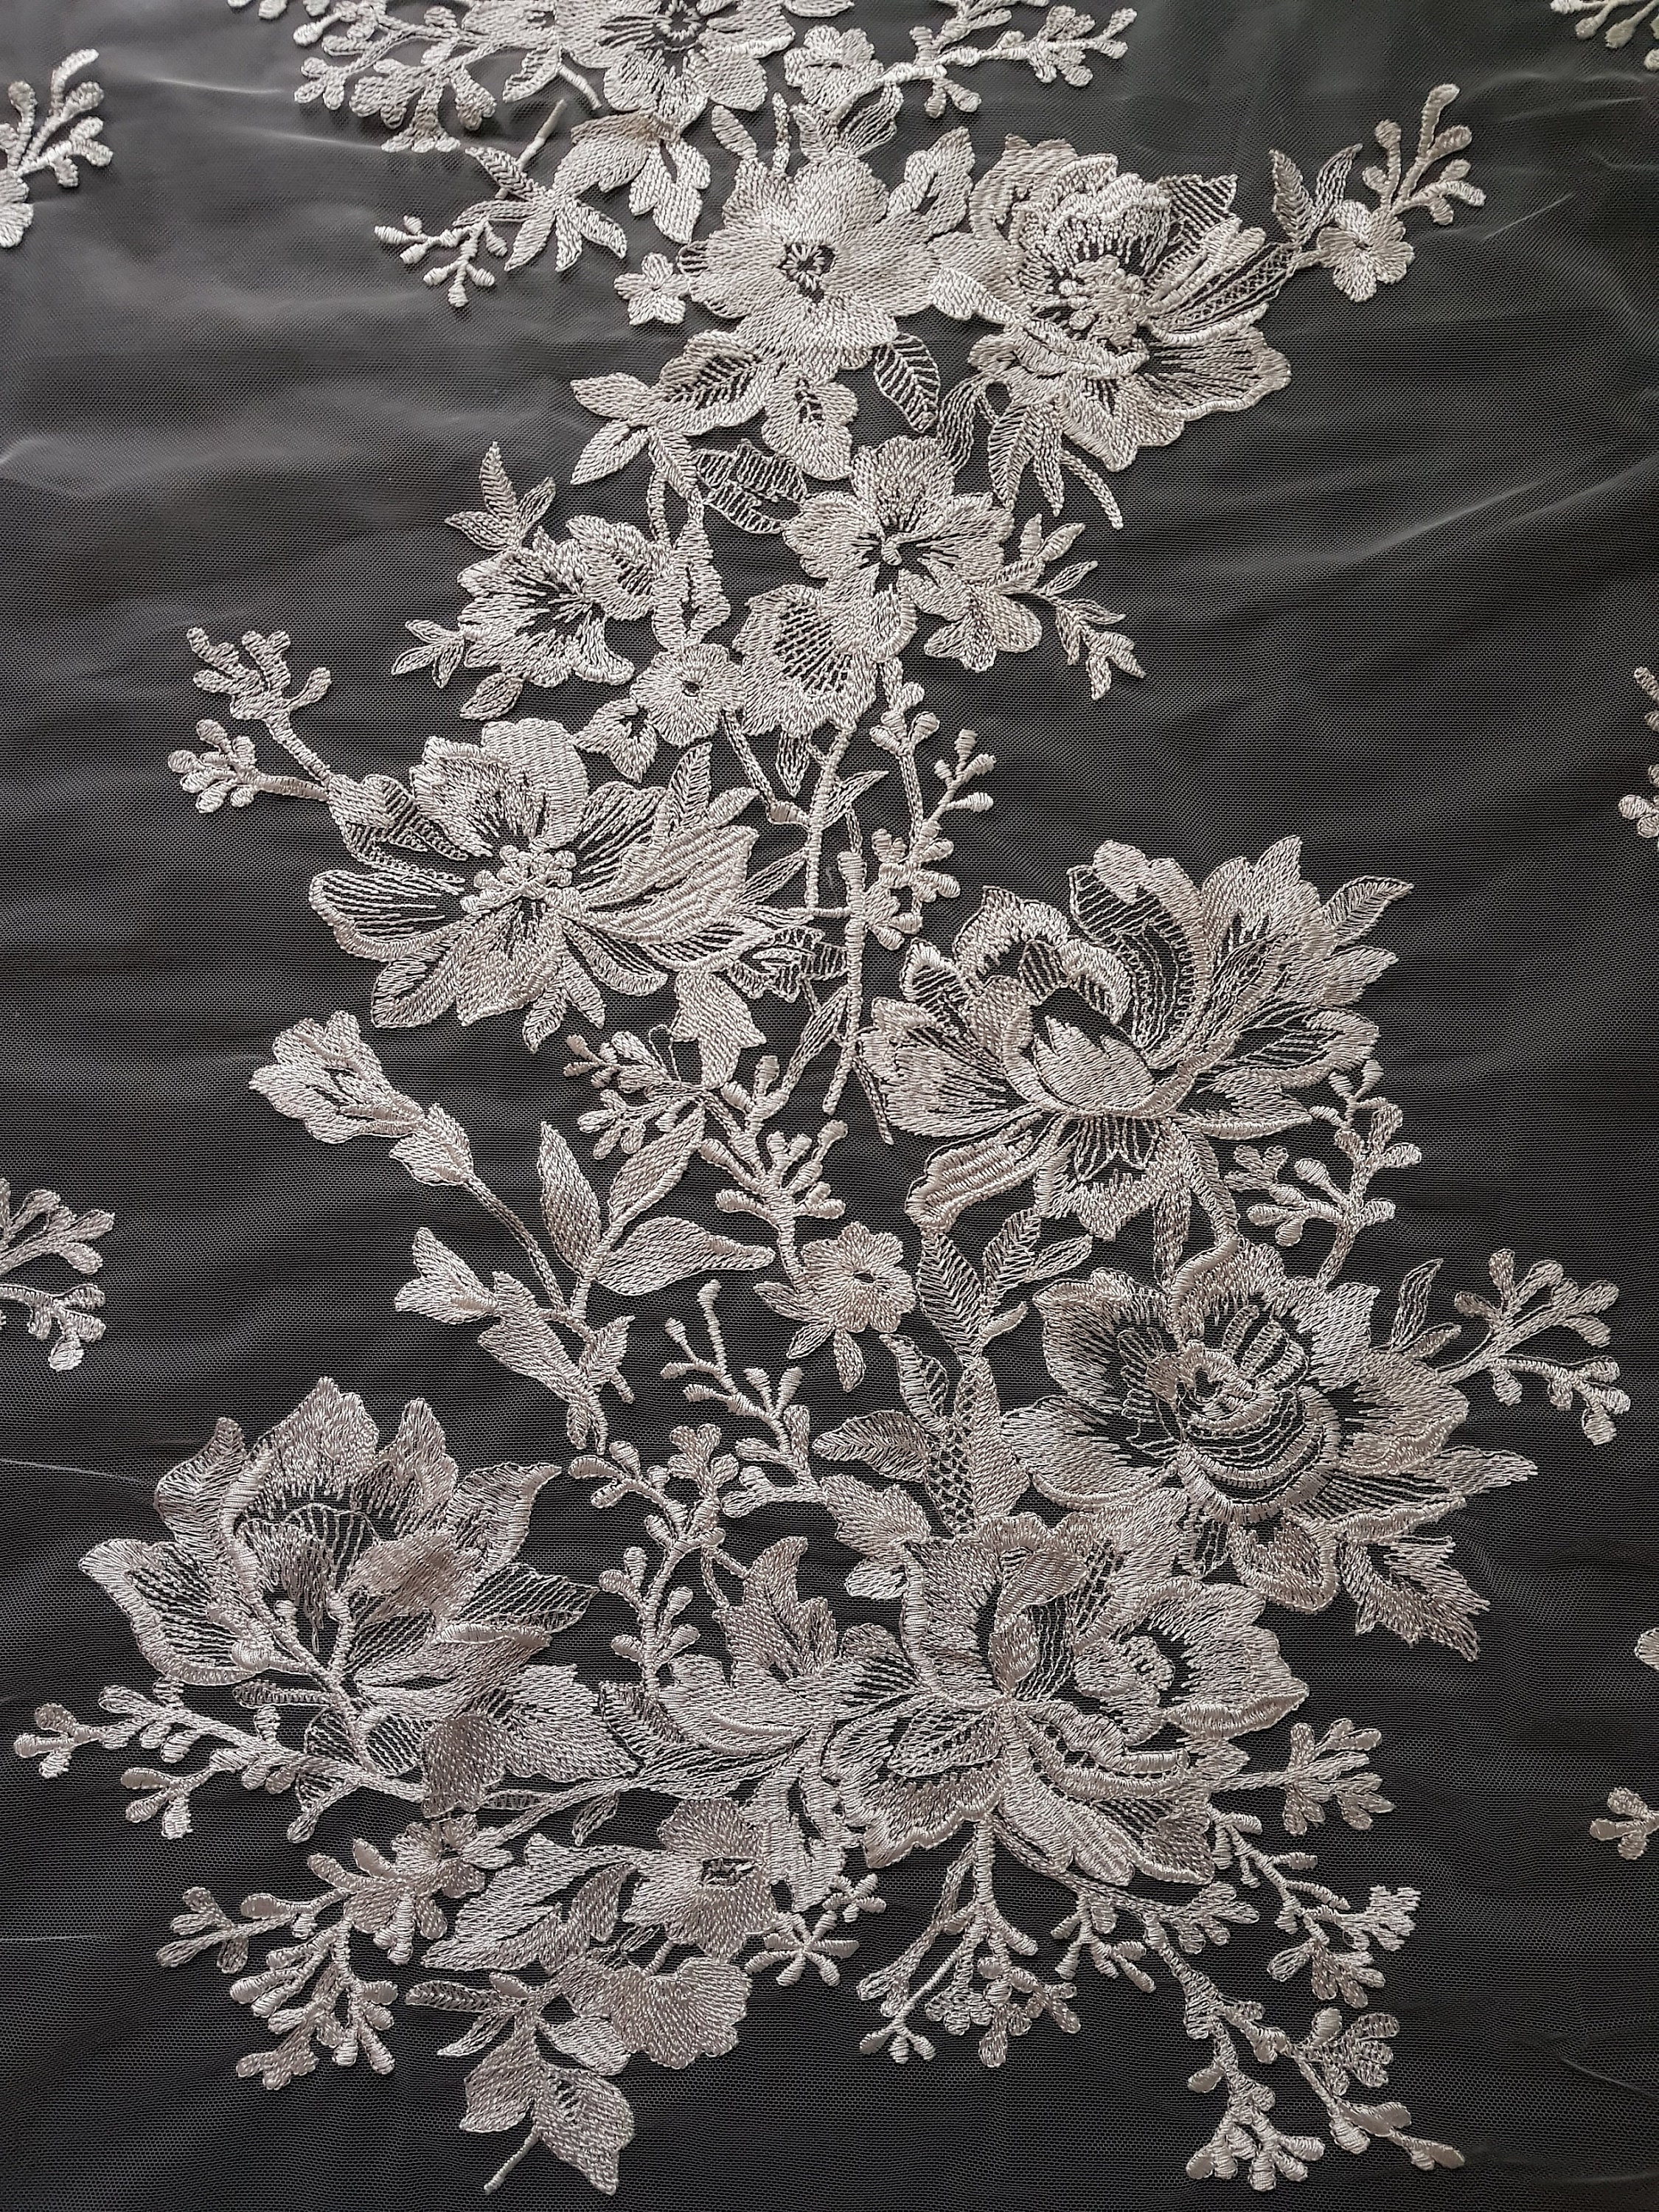 GAYCHUN Flower Embroidery Lace Fabric Wedding Bridal Dress | Etsy